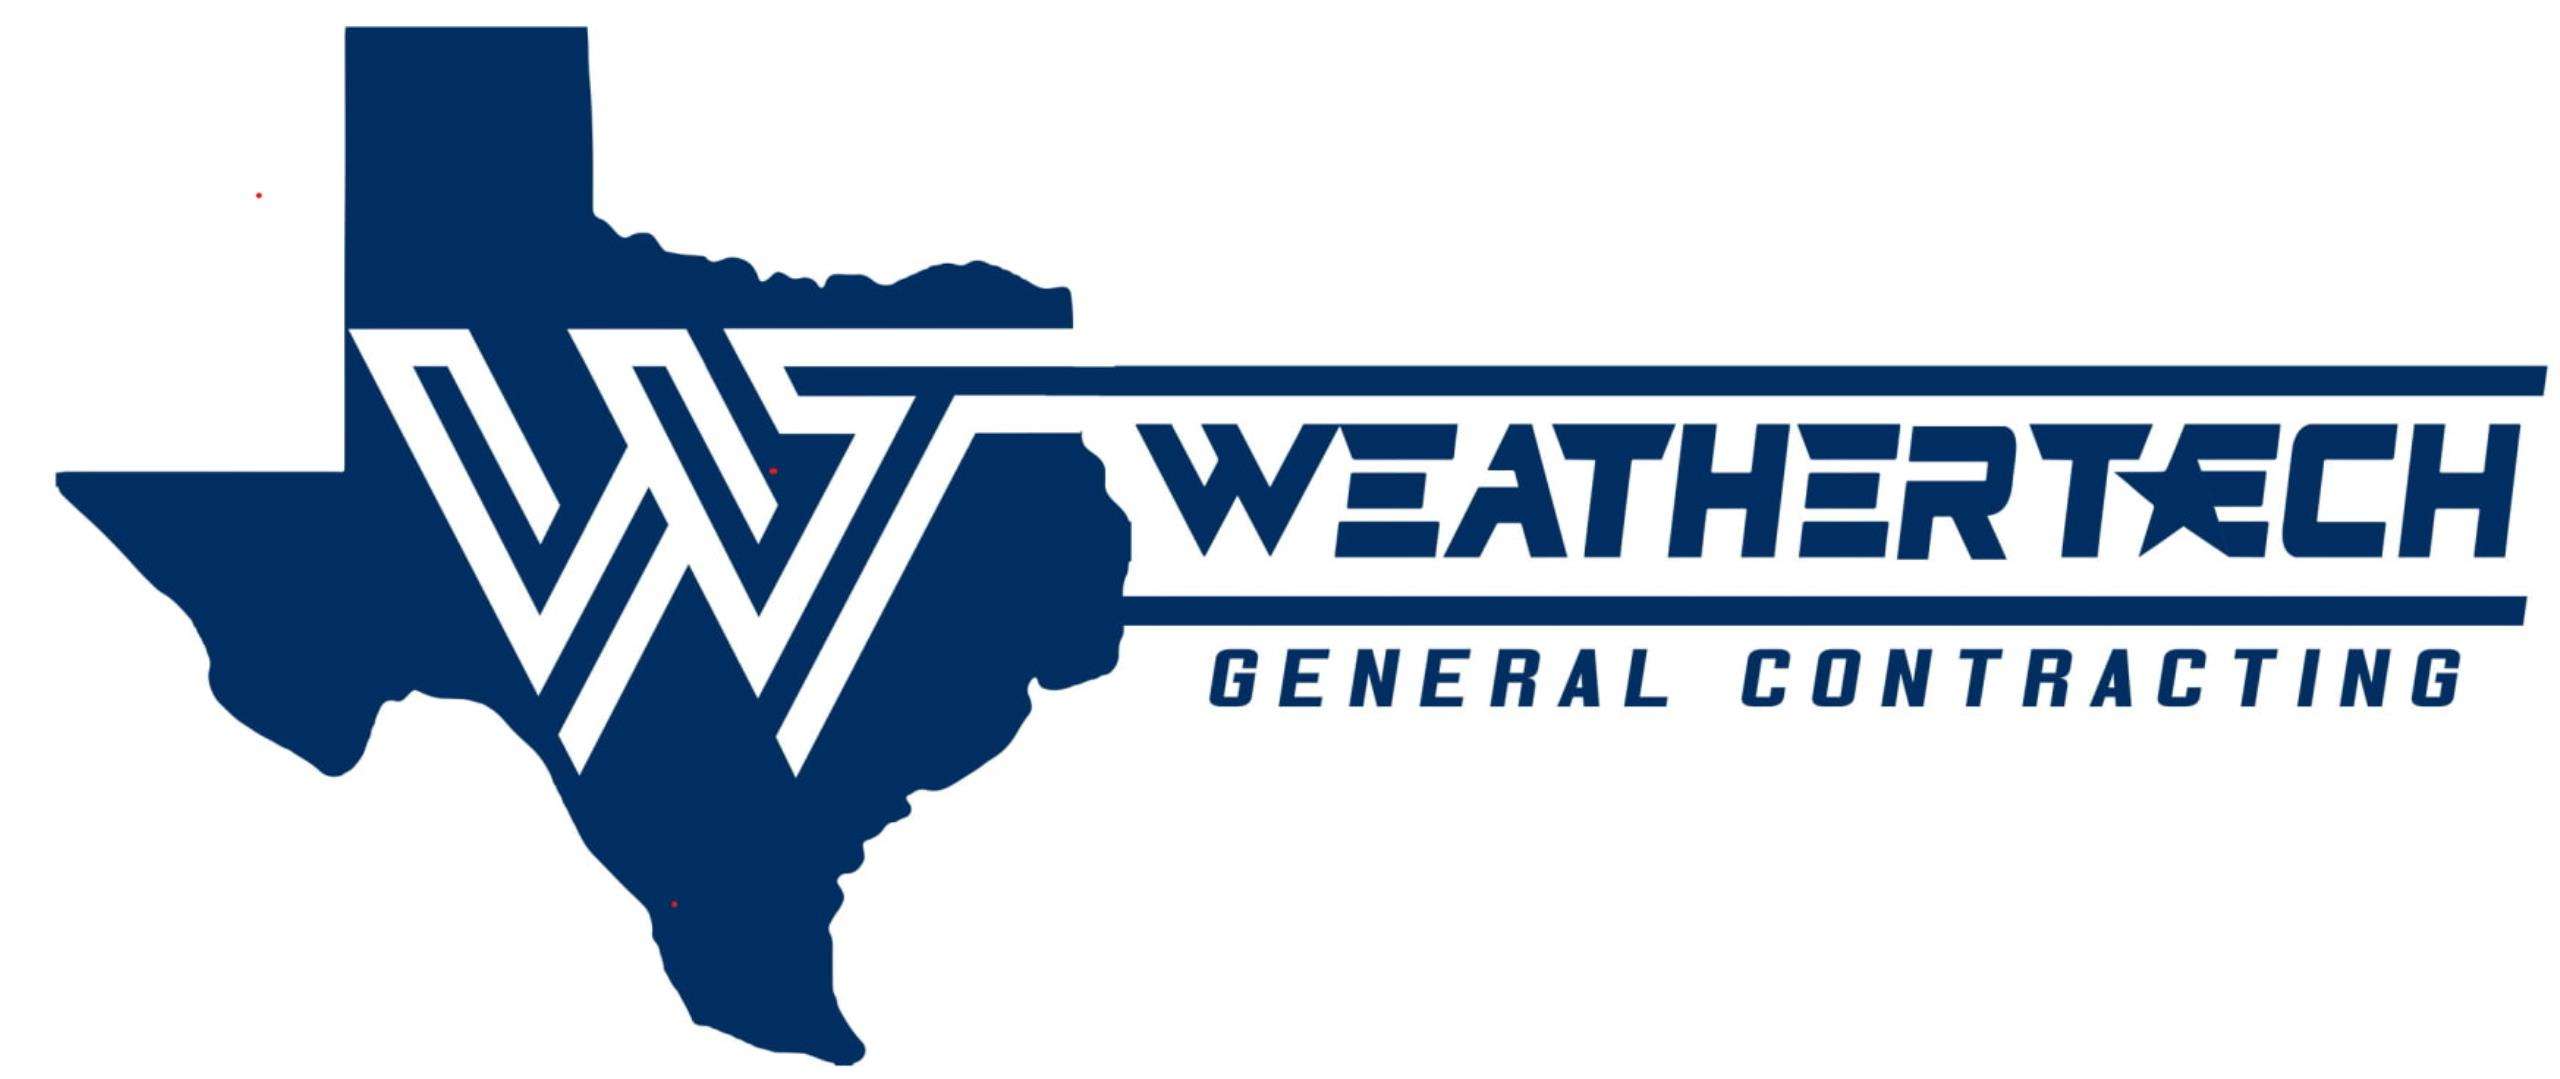 WeatherTech General Contracting Logo